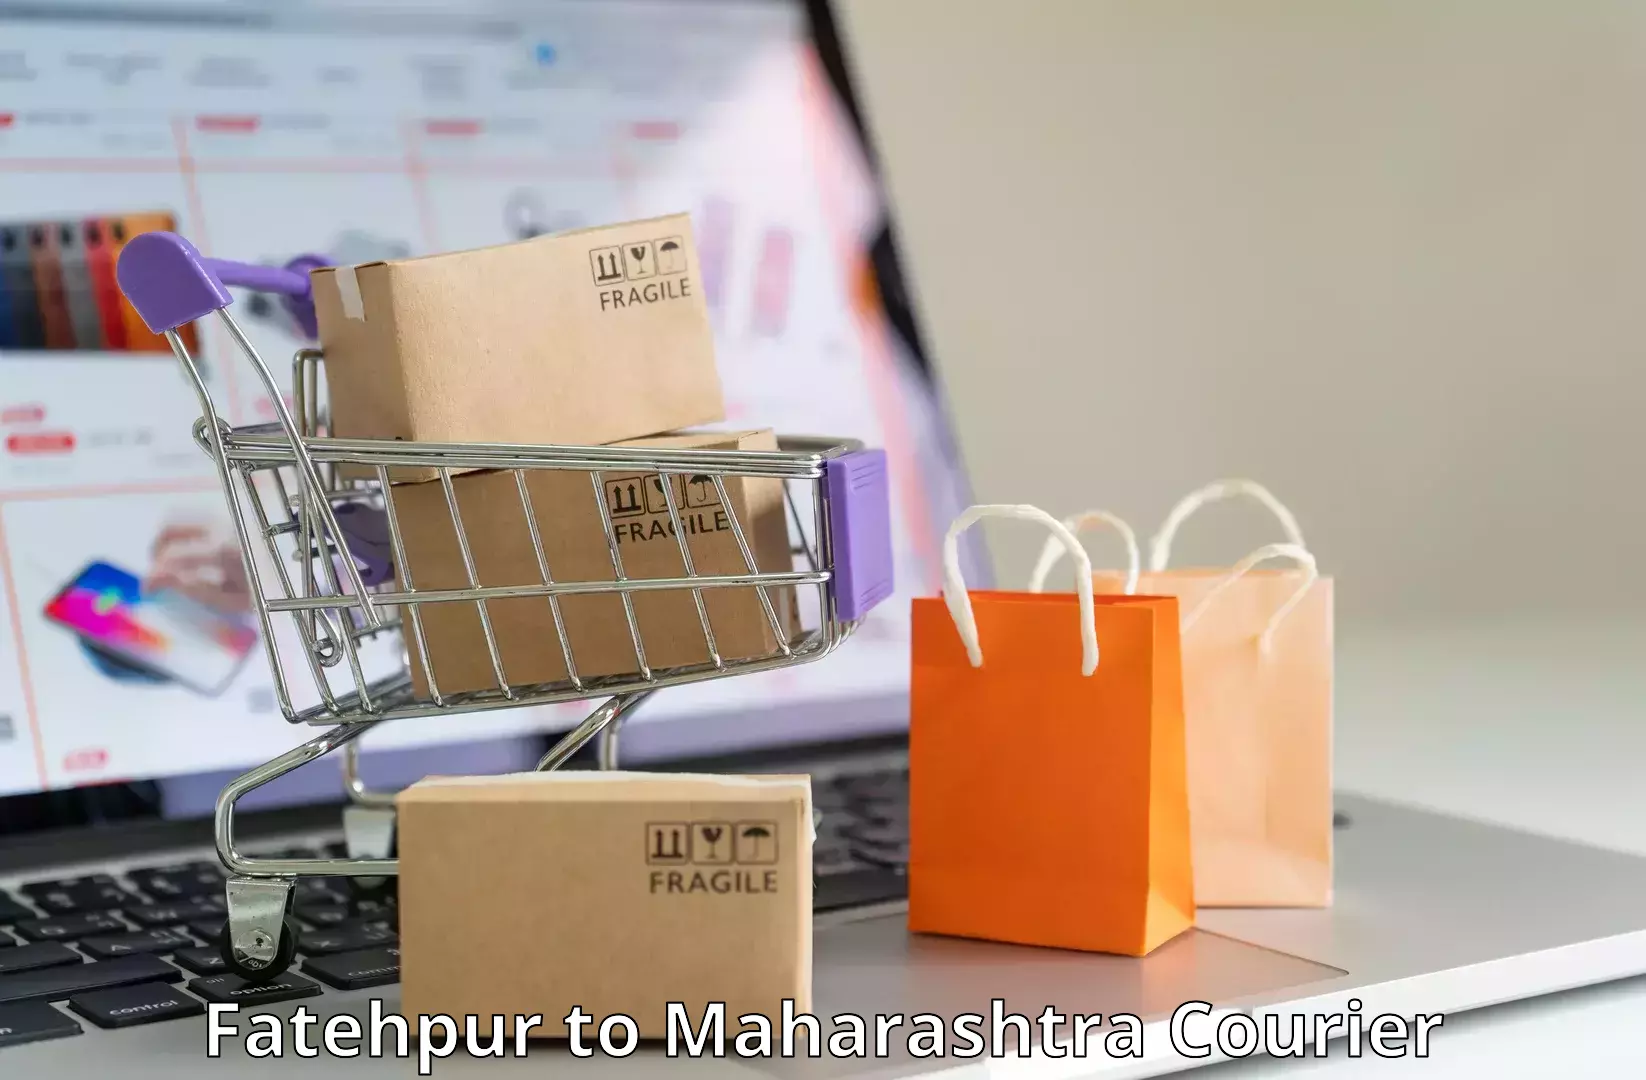 Express postal services Fatehpur to Maharashtra